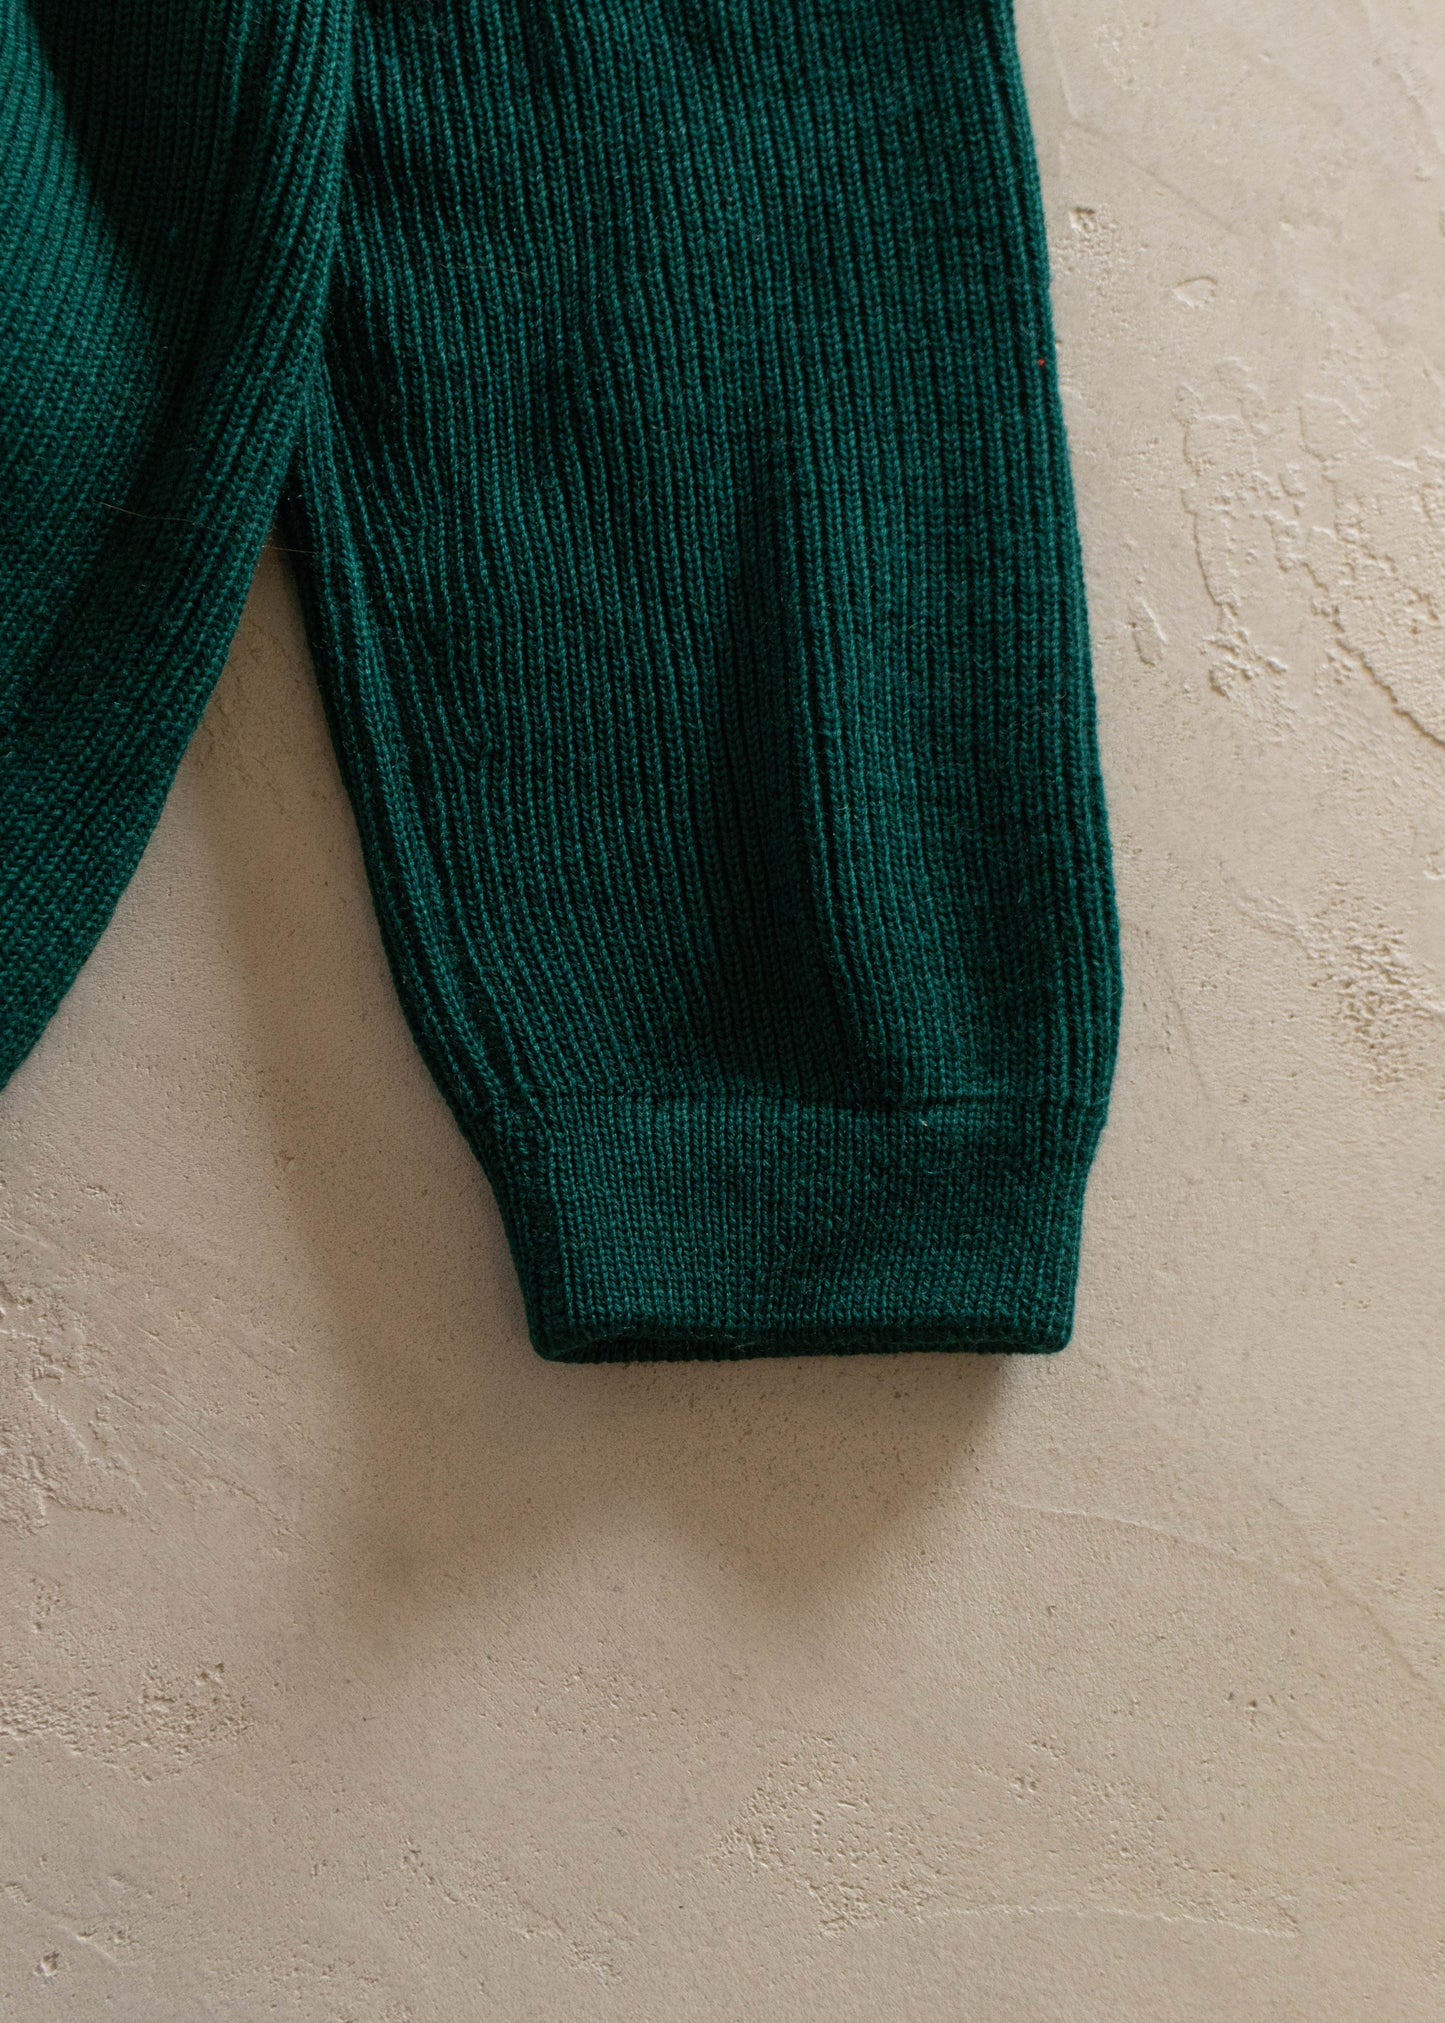 1980s Dayton's Ski Shop Wool Pullover Sweater Size S/M